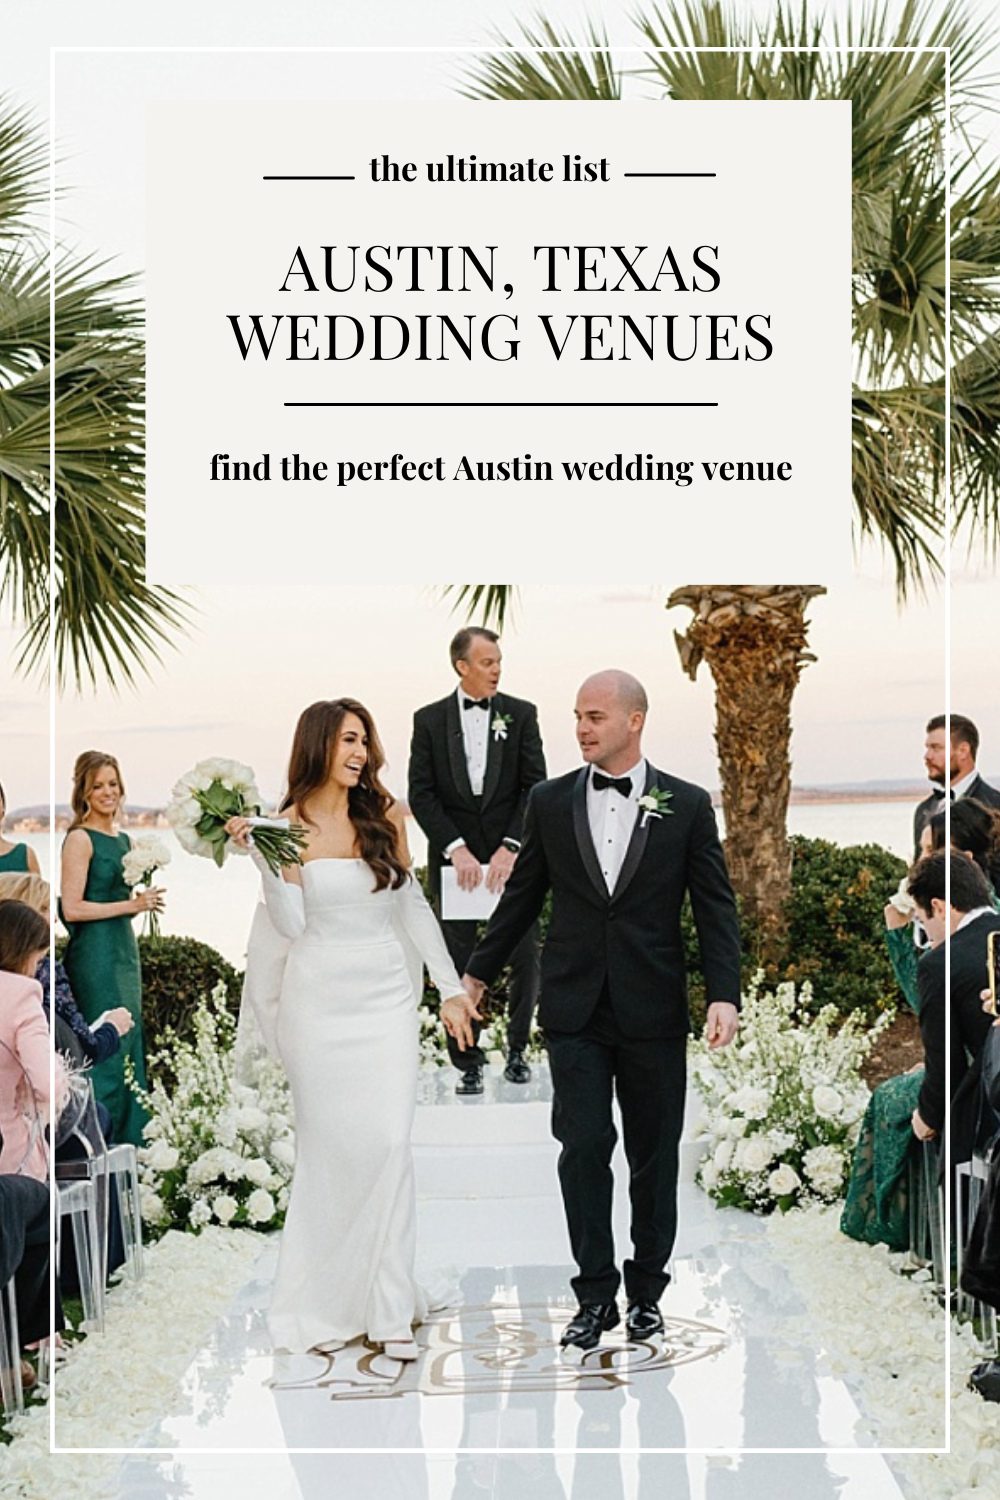 The Ultimate list of Austin, Texas wedding venues.